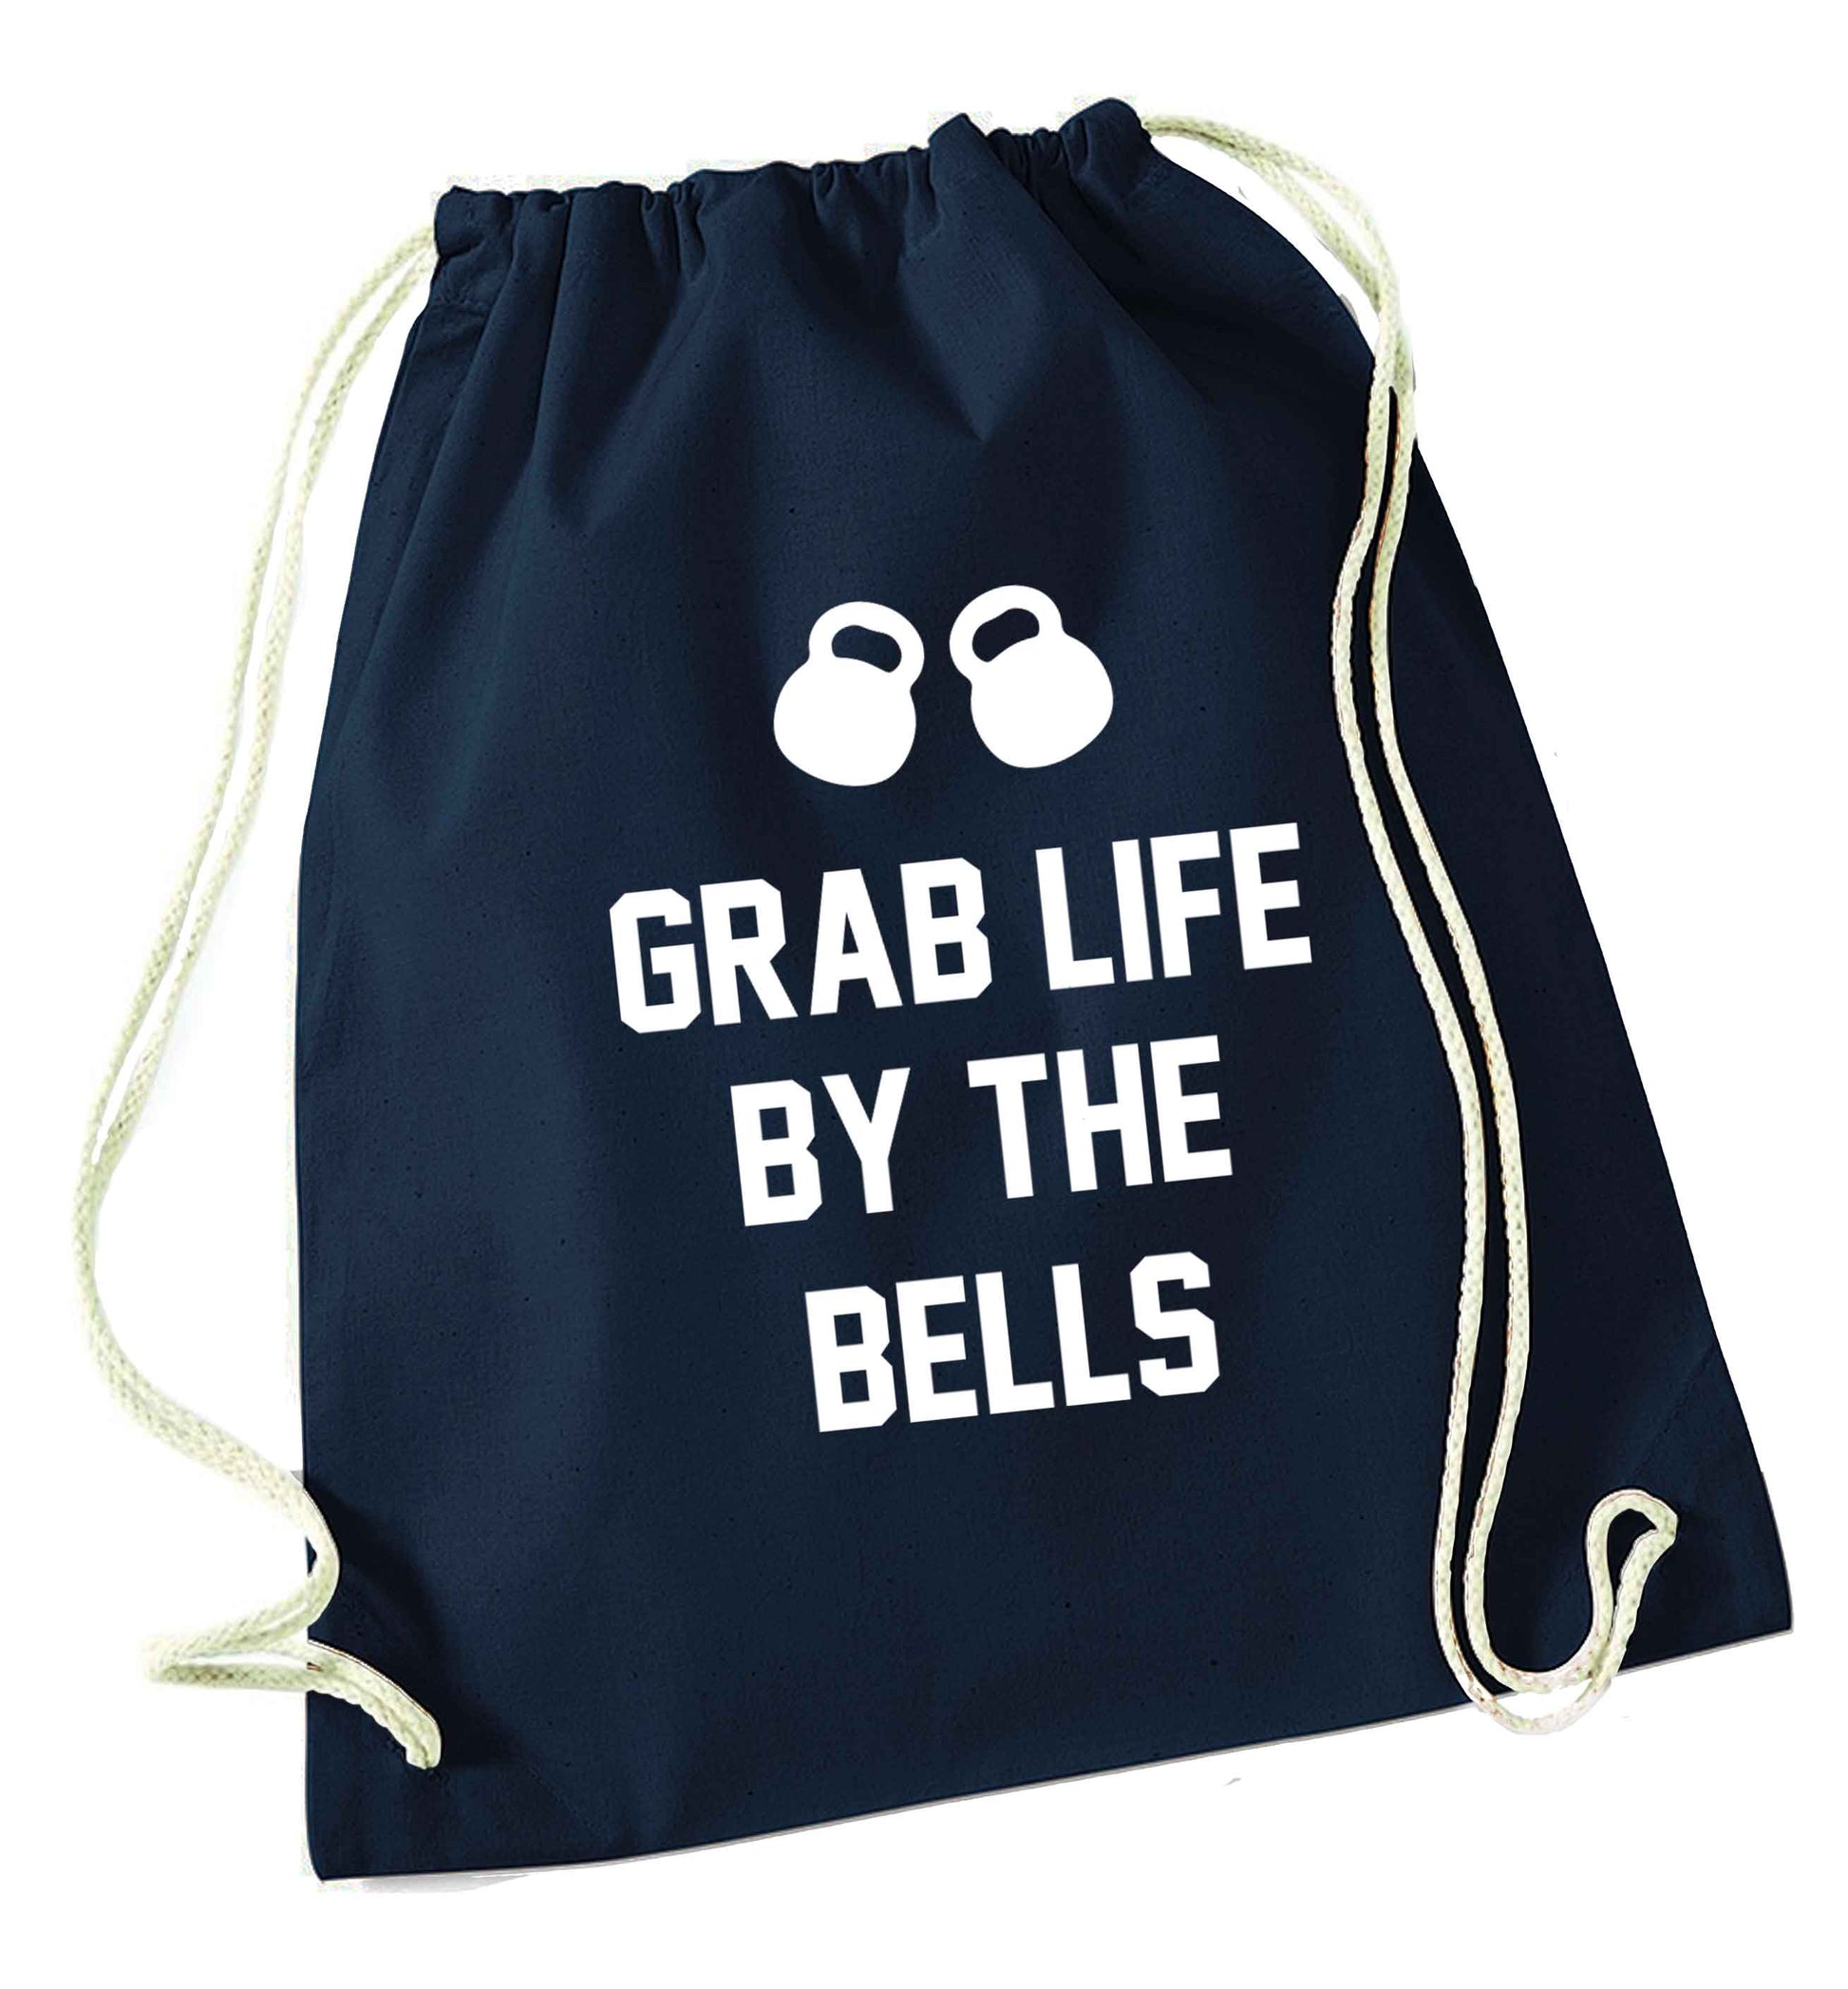 Grab life by the bells navy drawstring bag